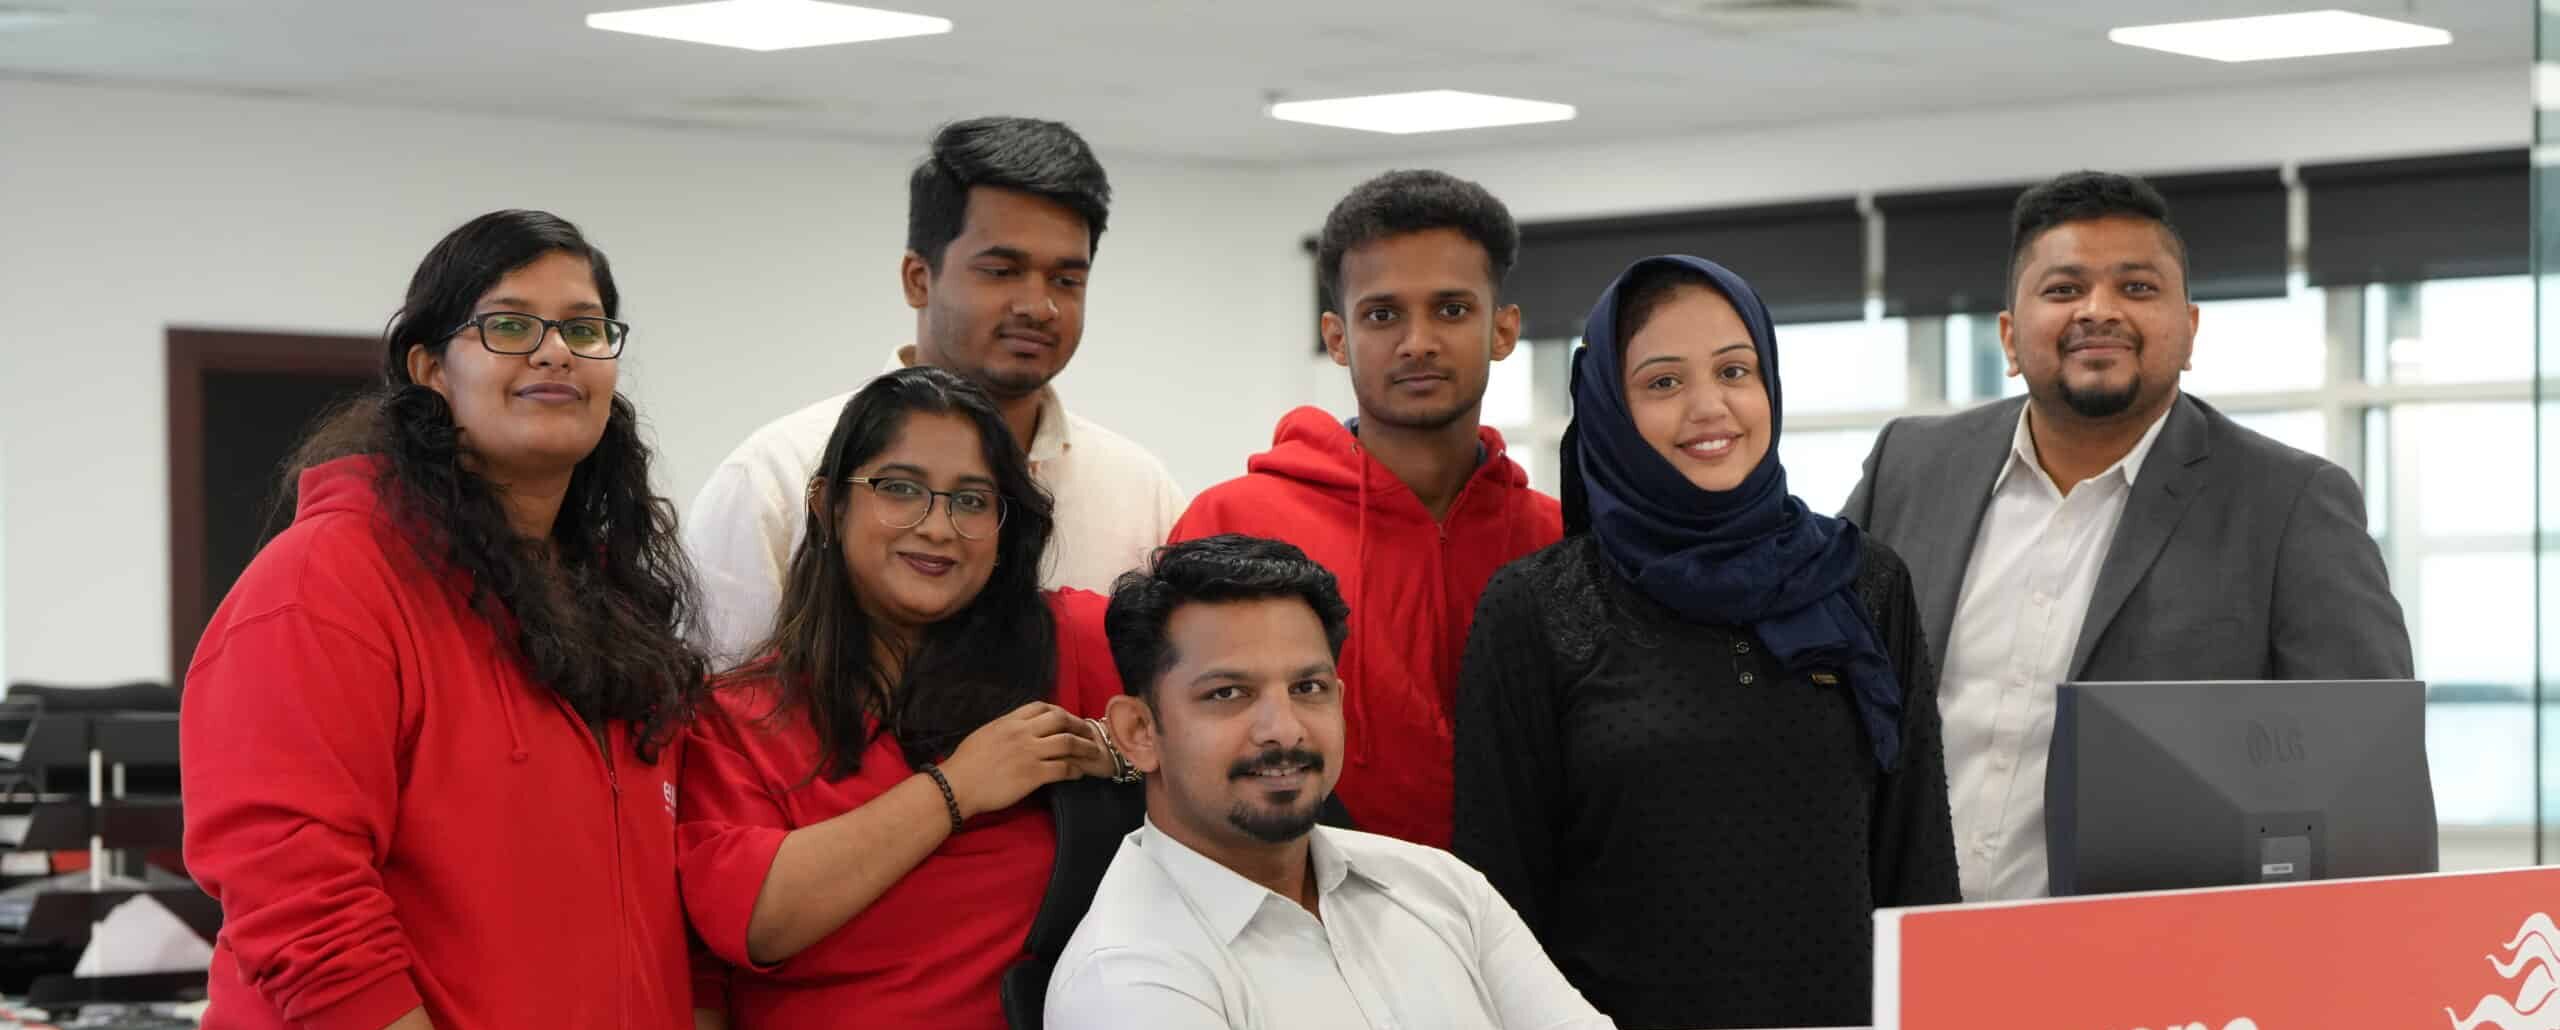 The Dubai team around a computer in Europa office.